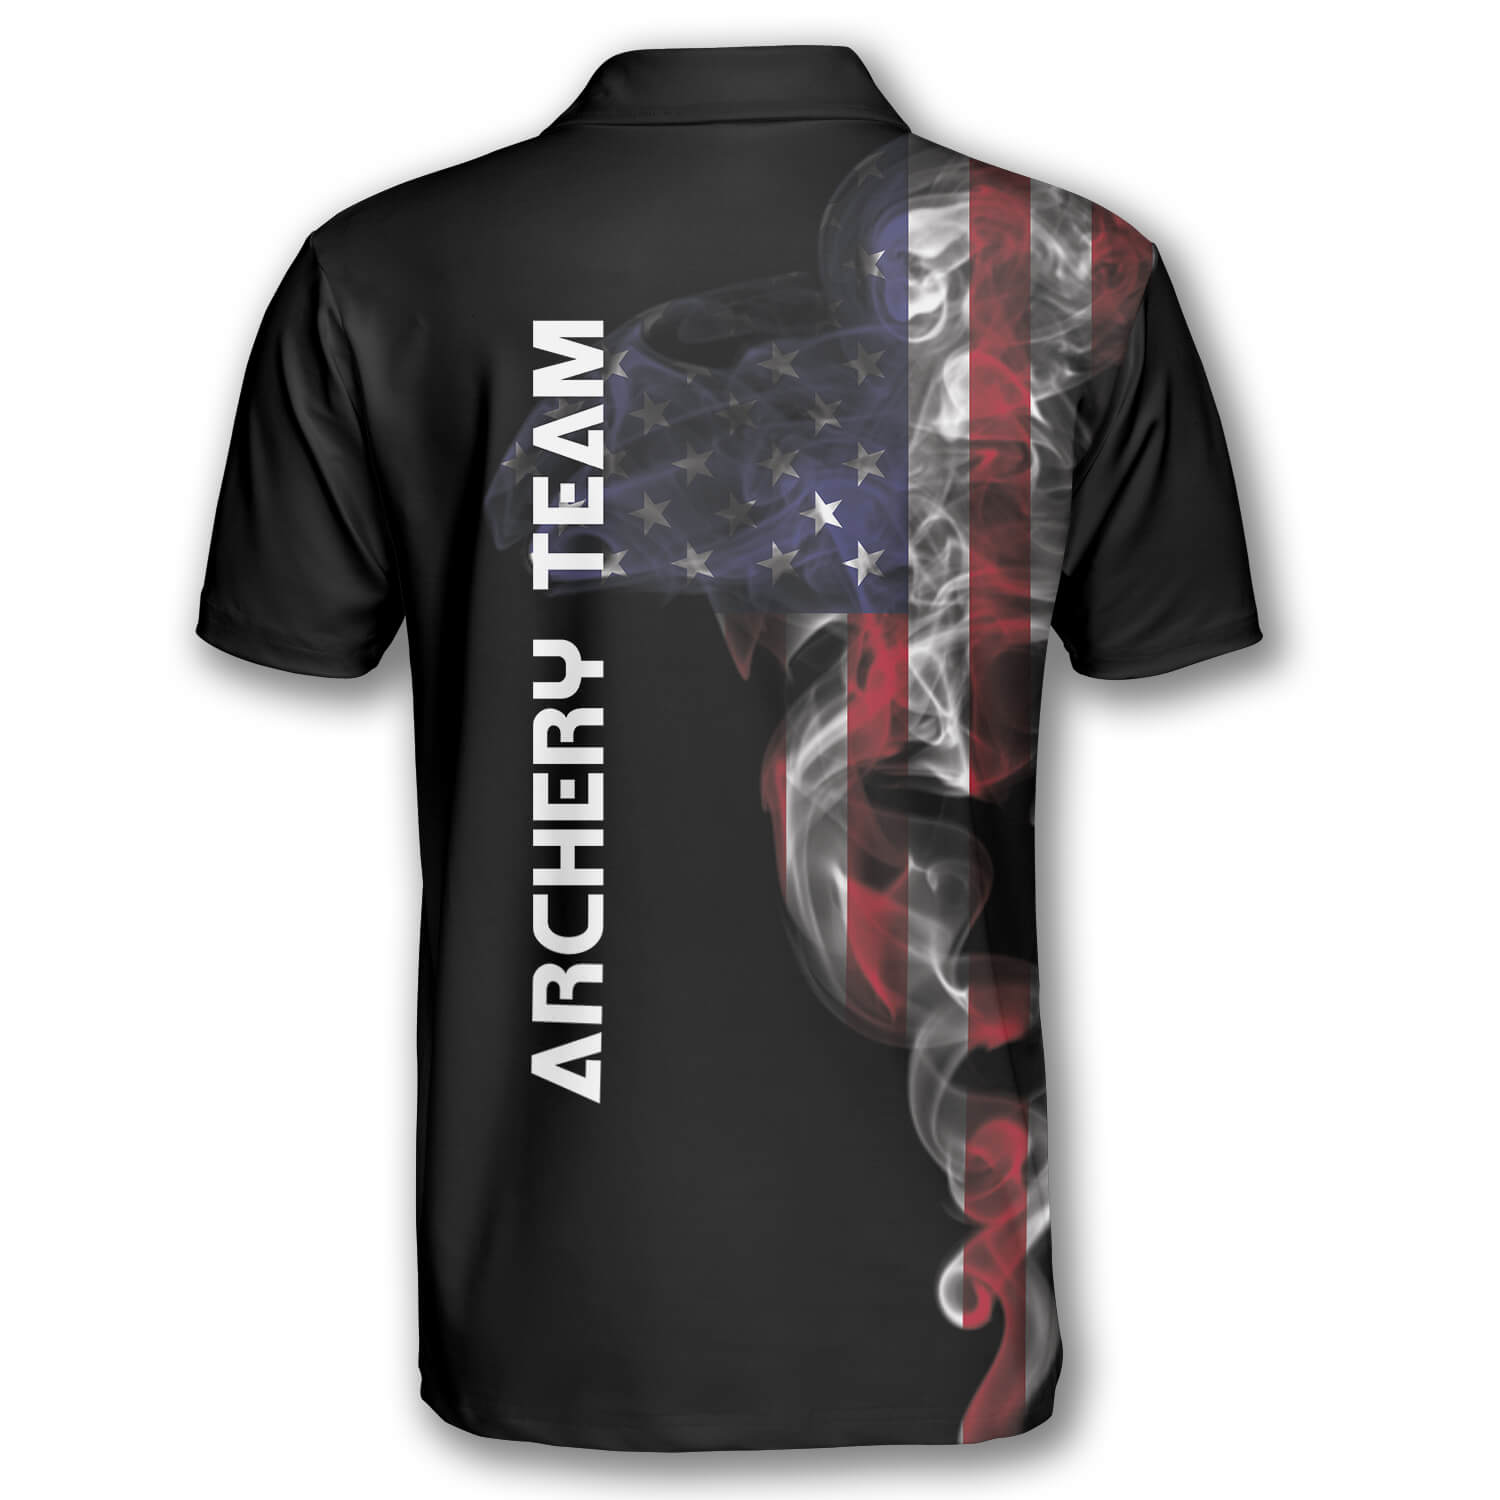 Archery Smoky US Flag Custom Archery Shirts For Men/ Perfect Uniform Archery Team